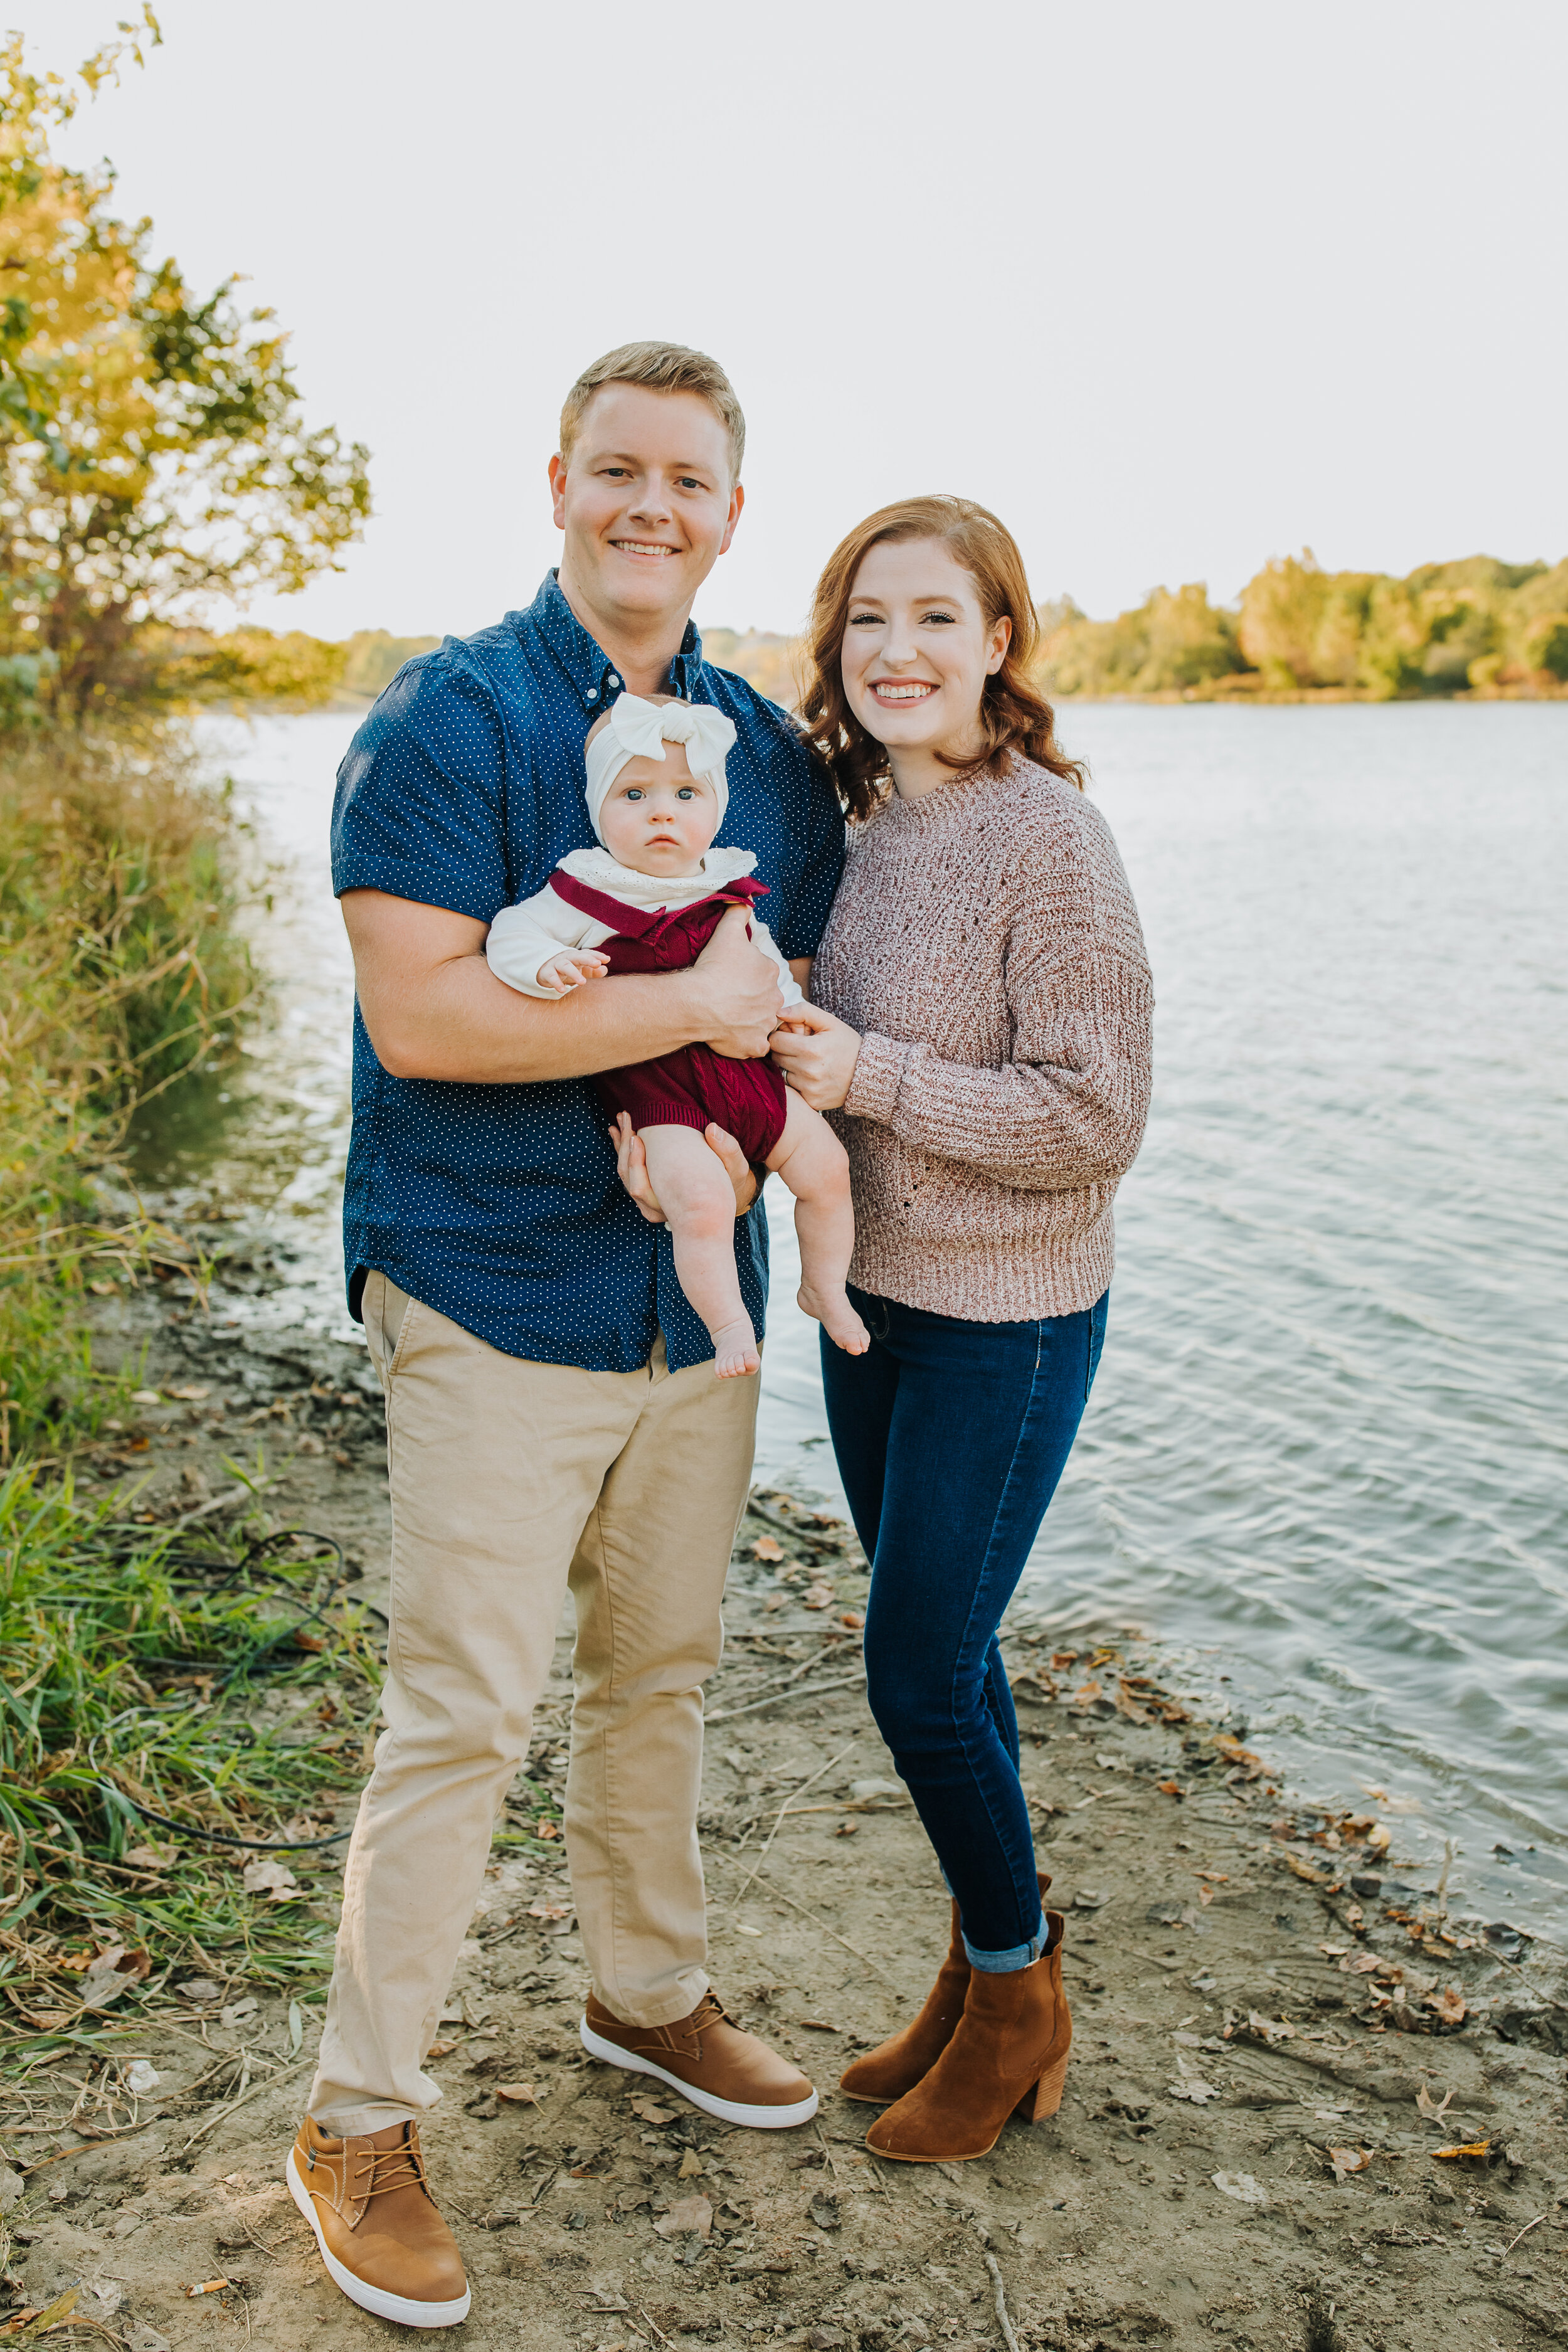 Unger Family Photos 2020 - Nathaniel Jensen Photography - Omaha Nebraska Family Photographer-7.jpg